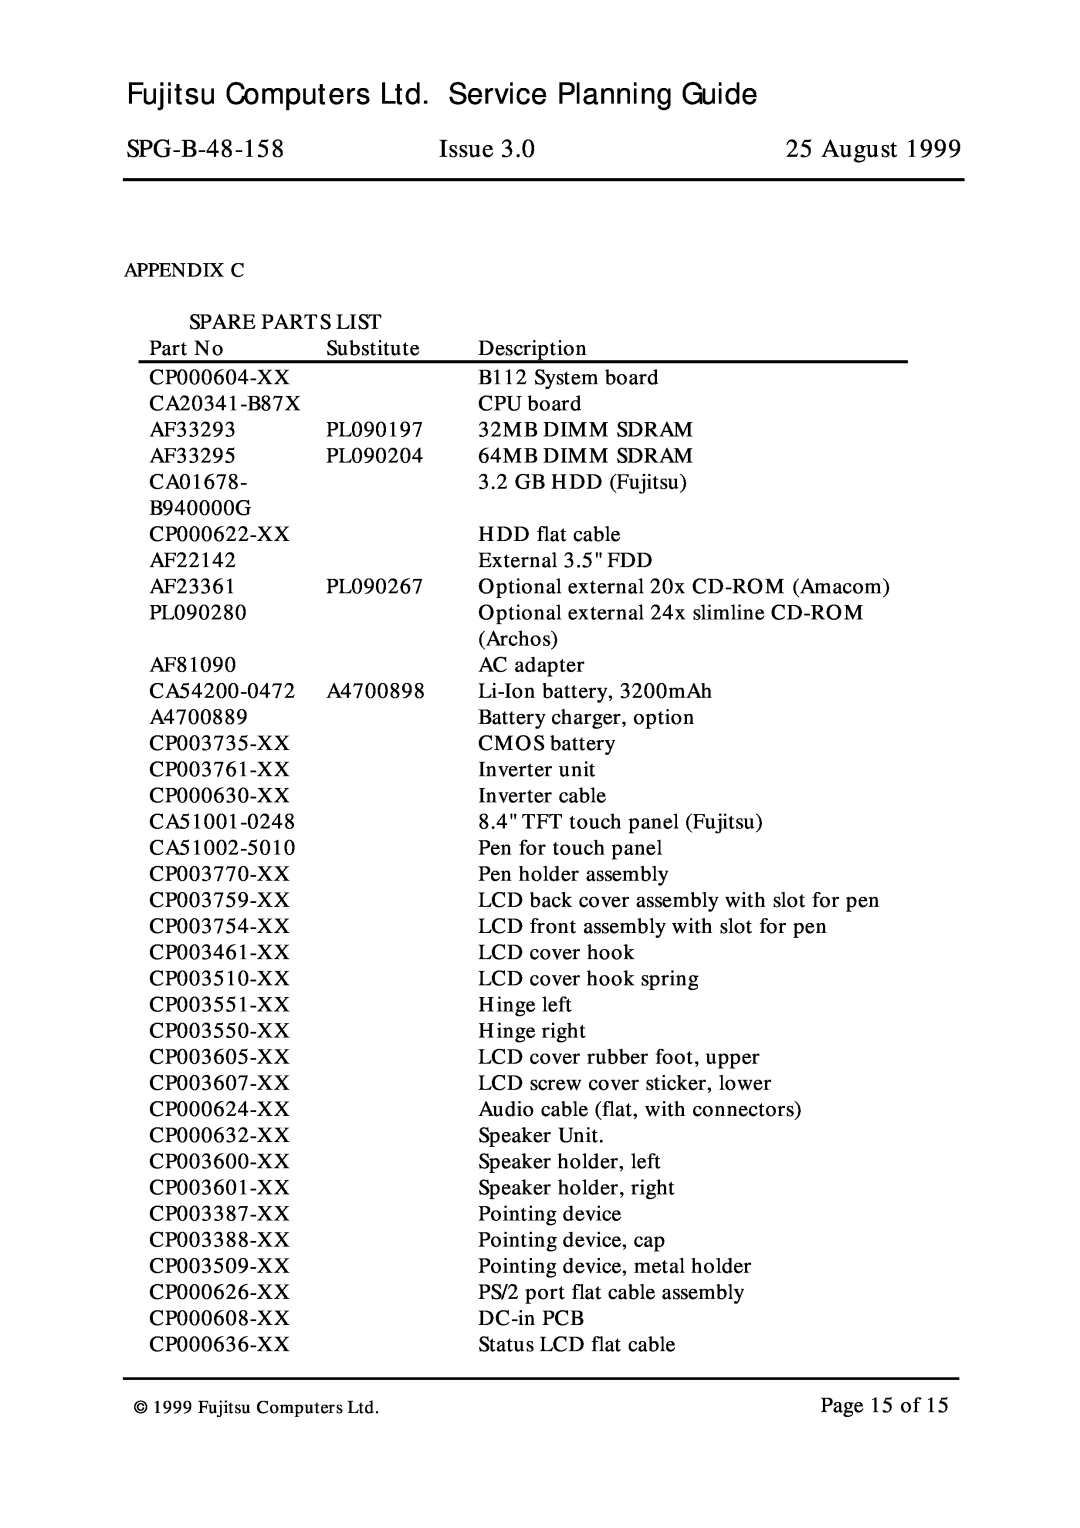 Fujitsu SPG-B-48-158 warranty Spare Parts List, Substitute, Description, Issue, August 